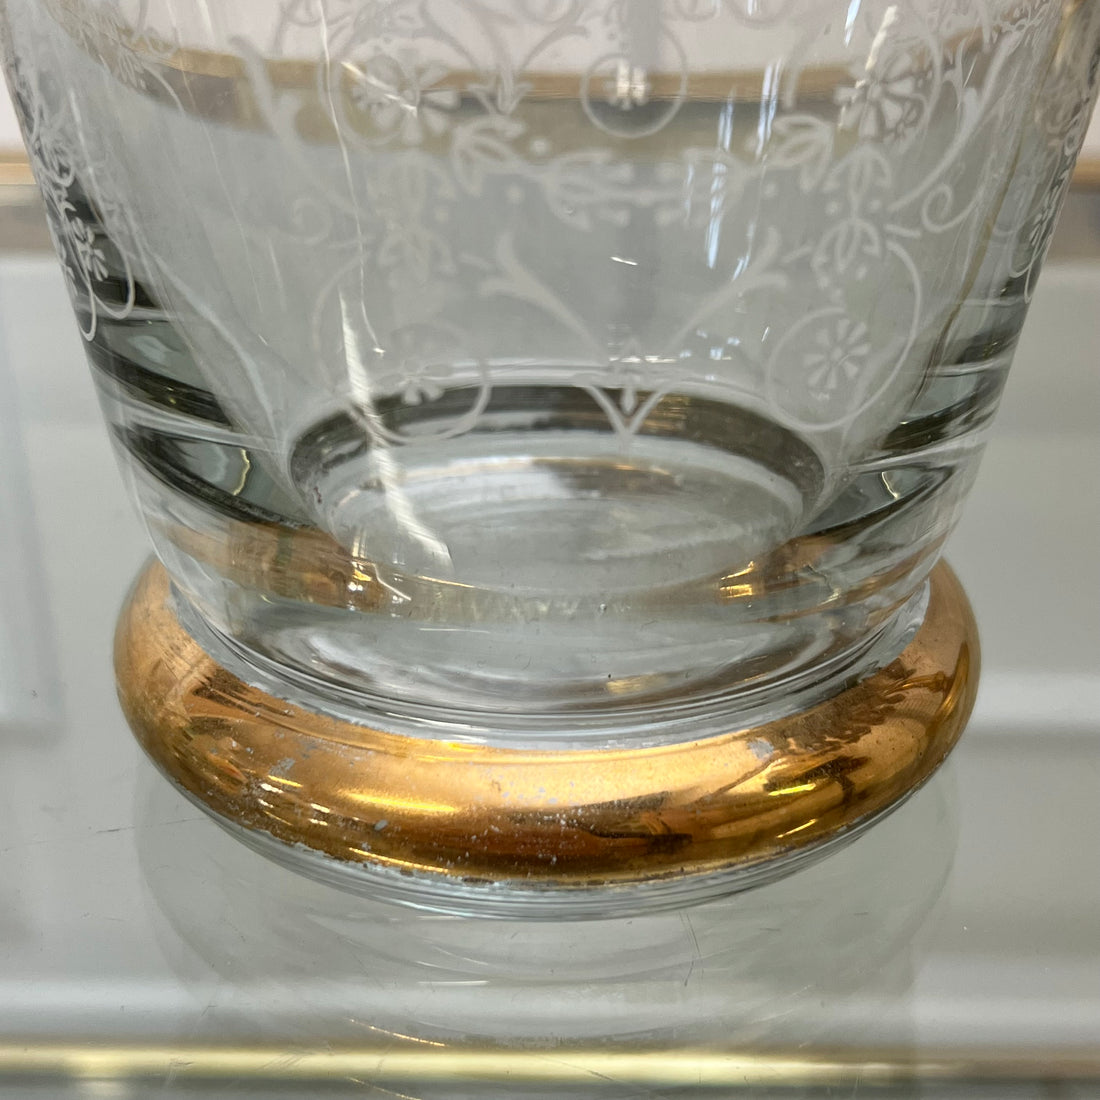 Vase 22 cm de Vallerysthal Portieux